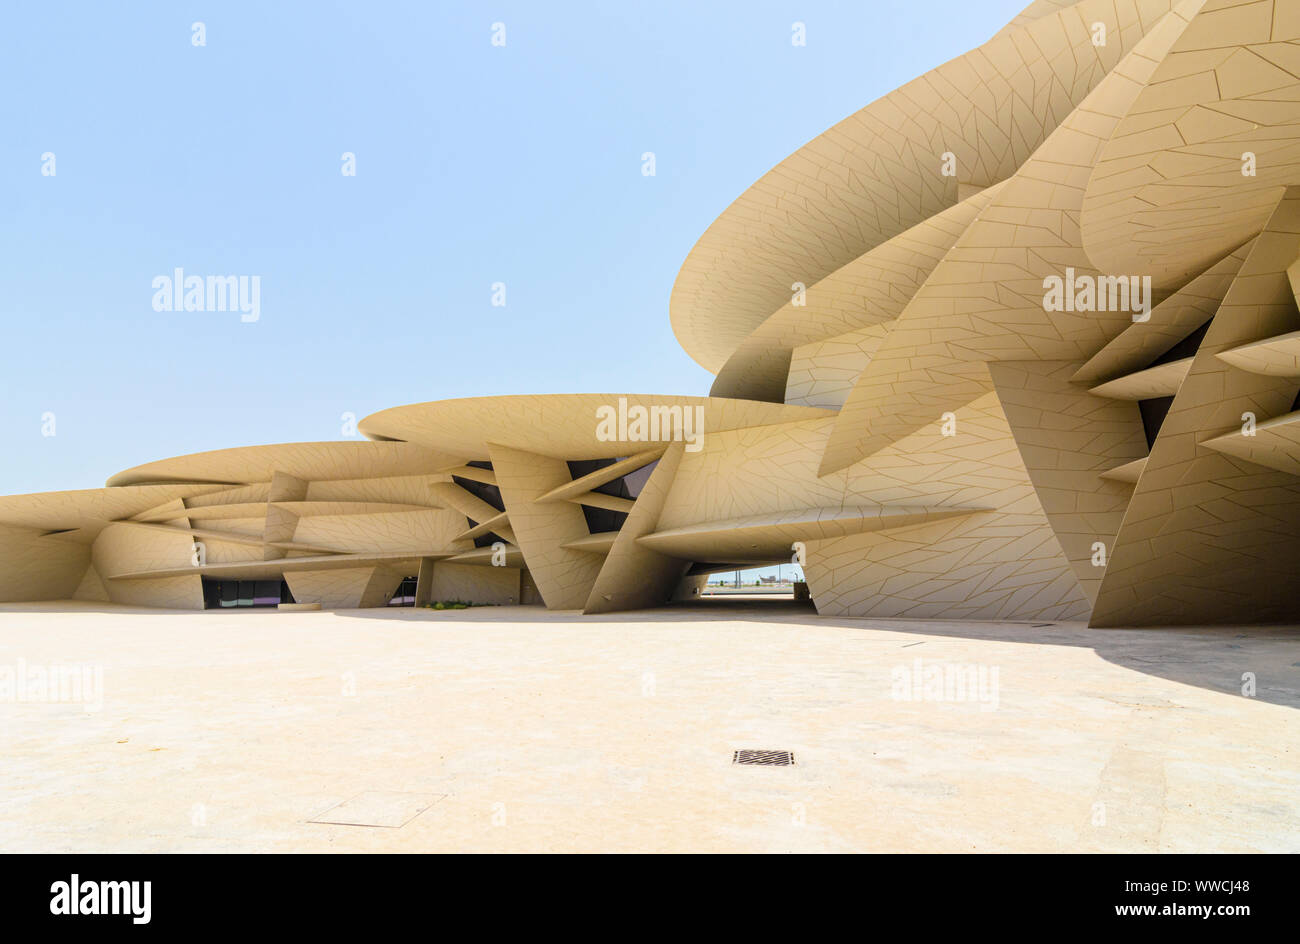 The desert rose inspired architectural landmark of the National Museum of Qatar, Doha, Qatar Stock Photo